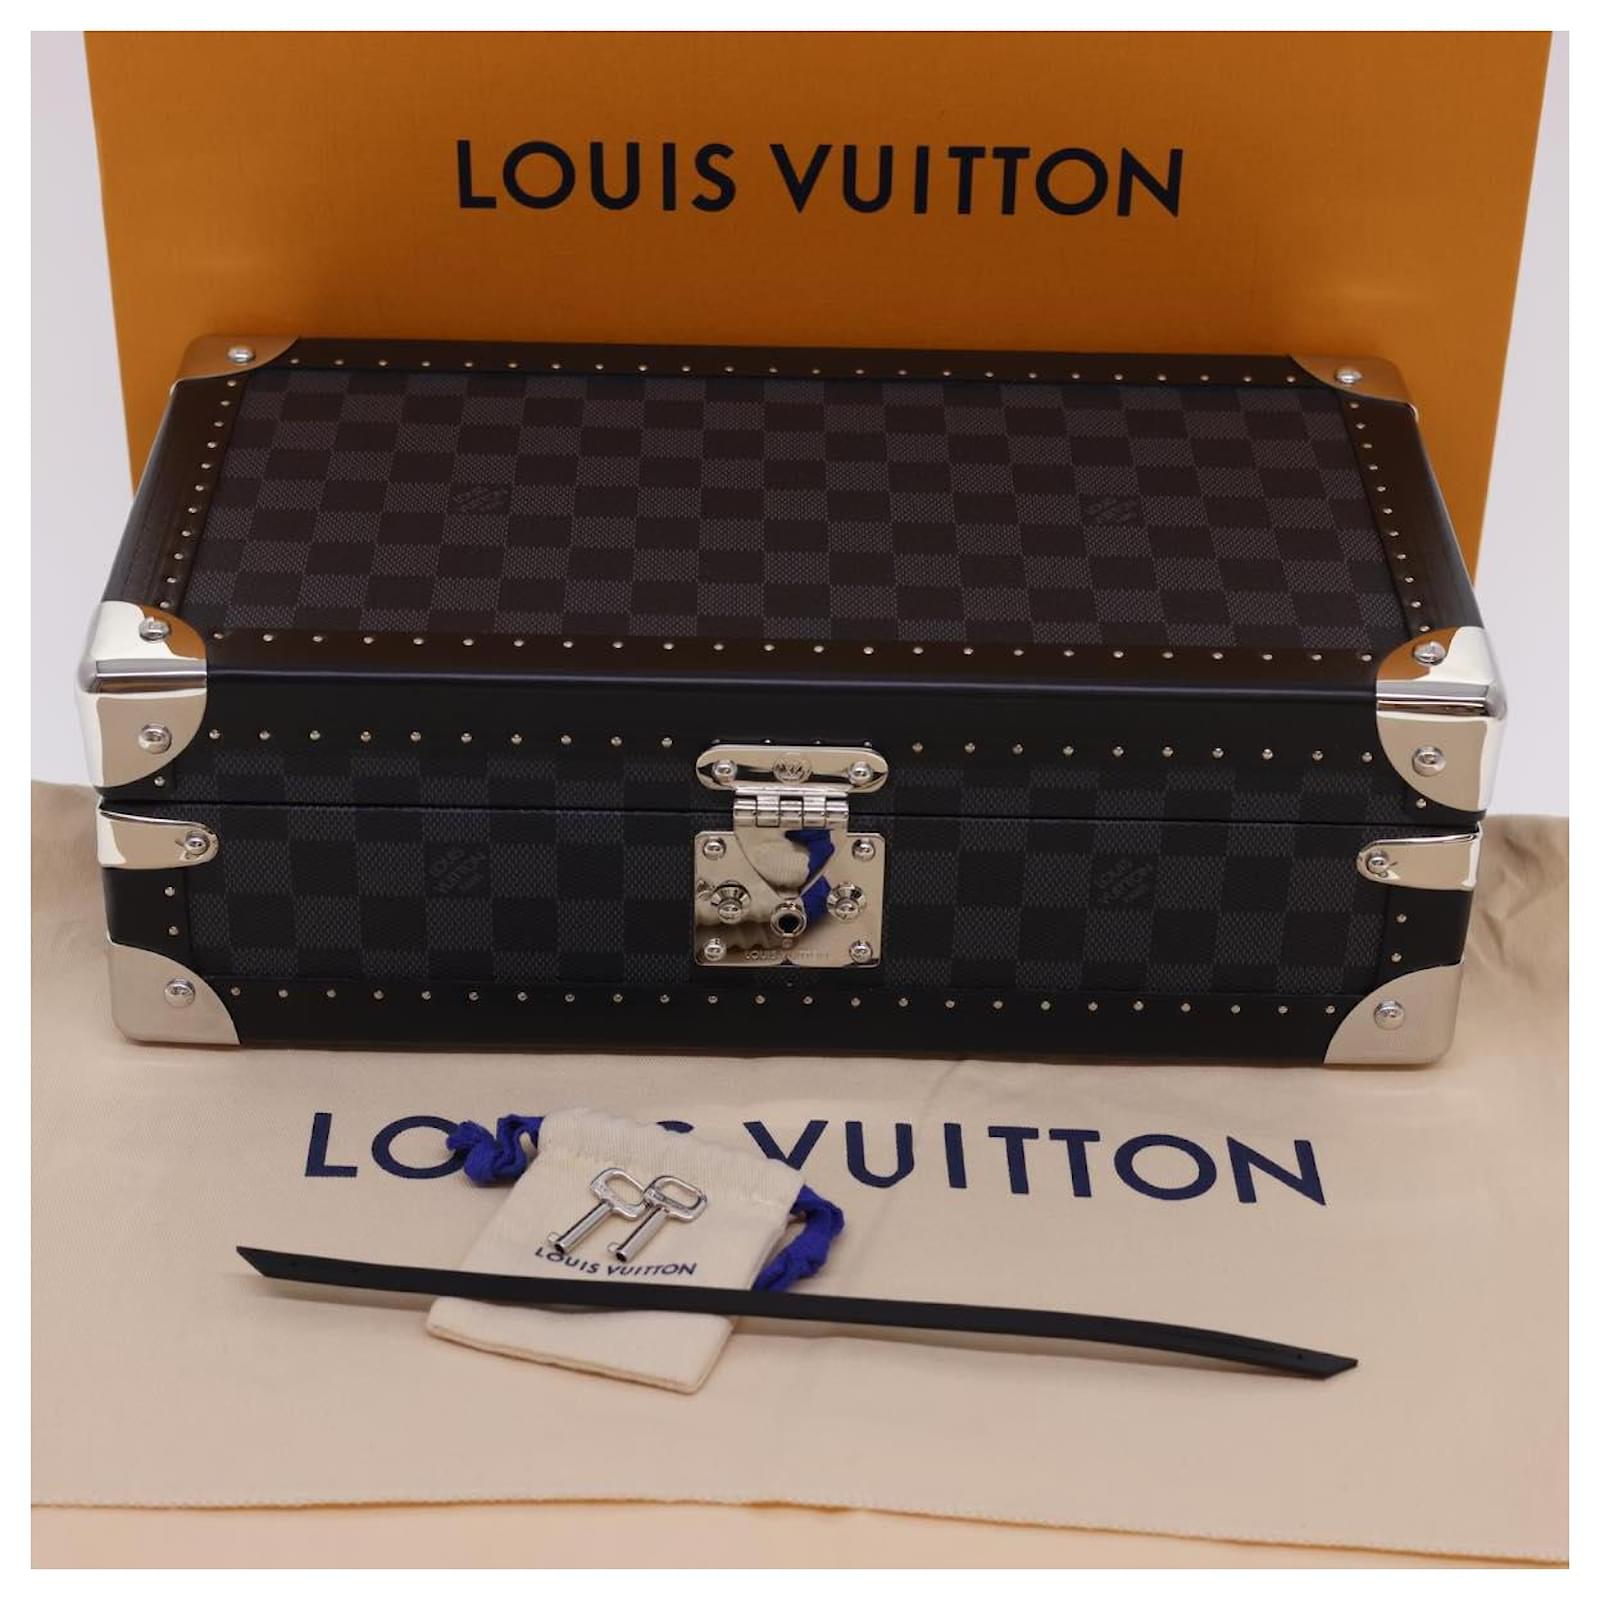 LOUIS VUITTON Monogram Coffret 8 Montor Trunk Watch case M20016 LV